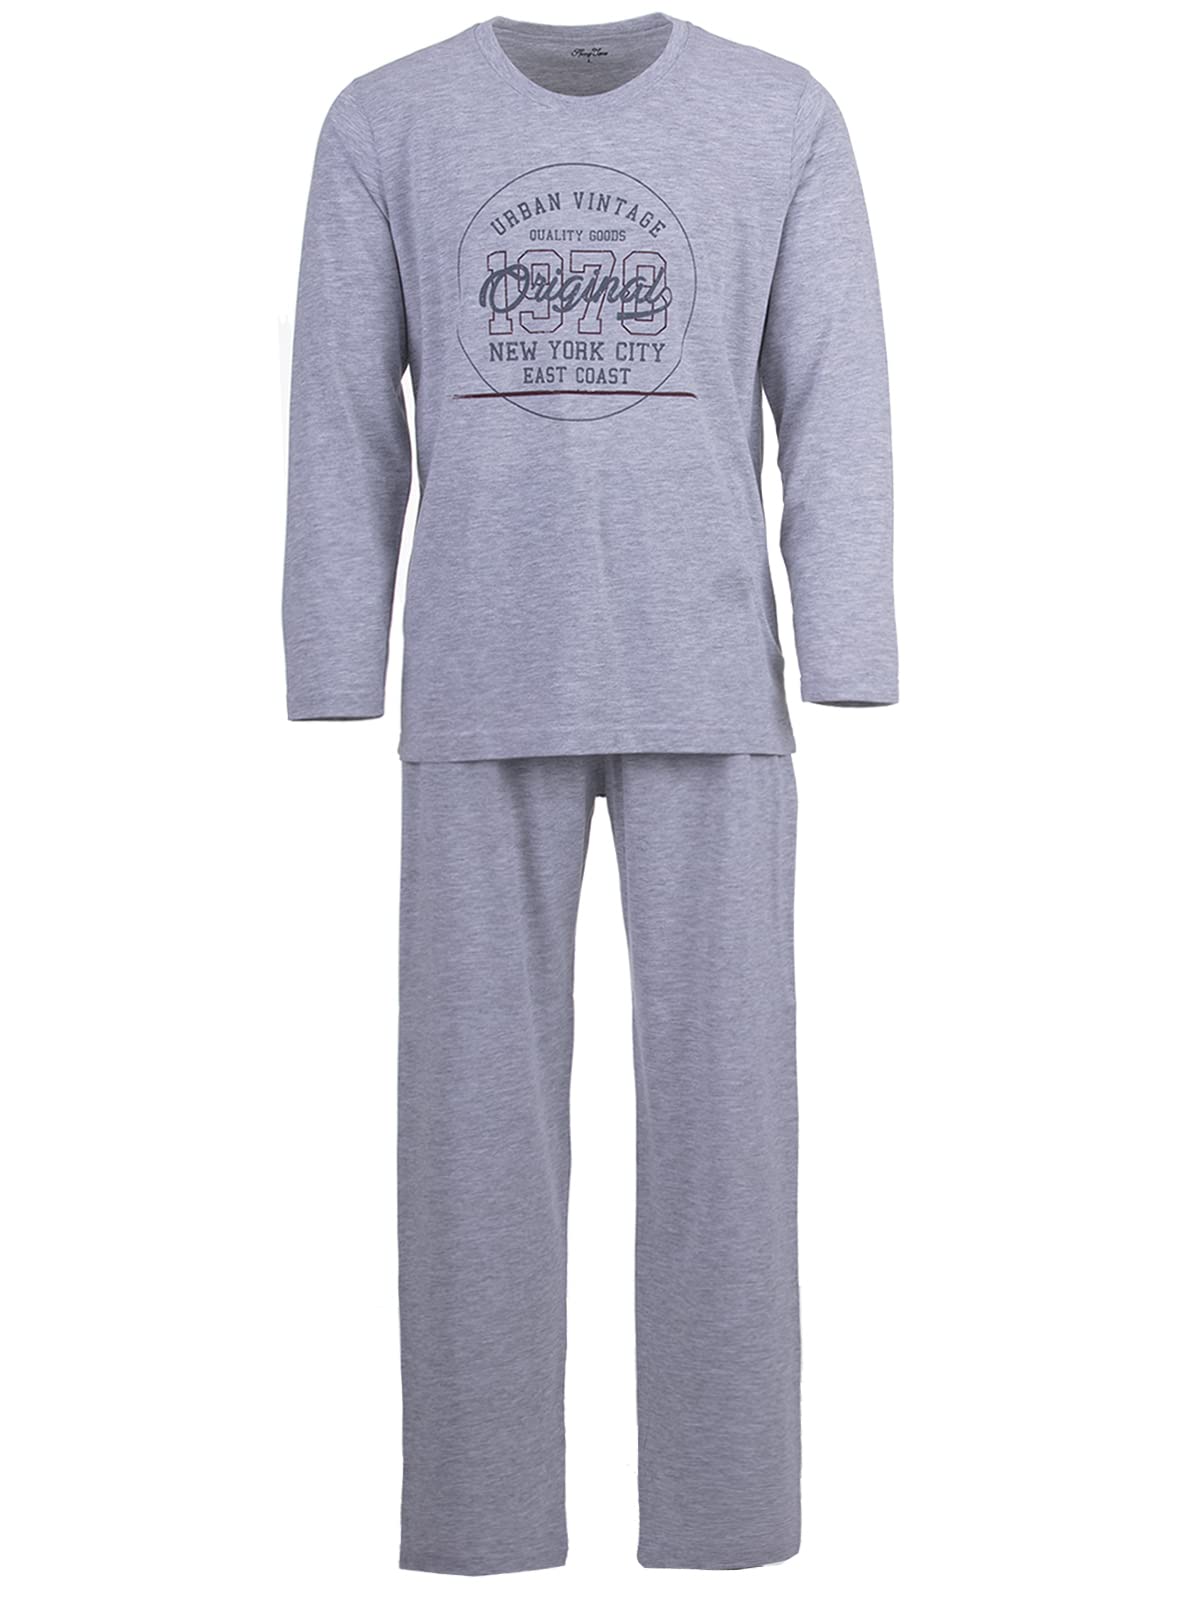 LUCKY Herren Pyjama lang Schlafanzug Pyjama Set Druck Motiv, Farbe:Grau, Größe:3XL